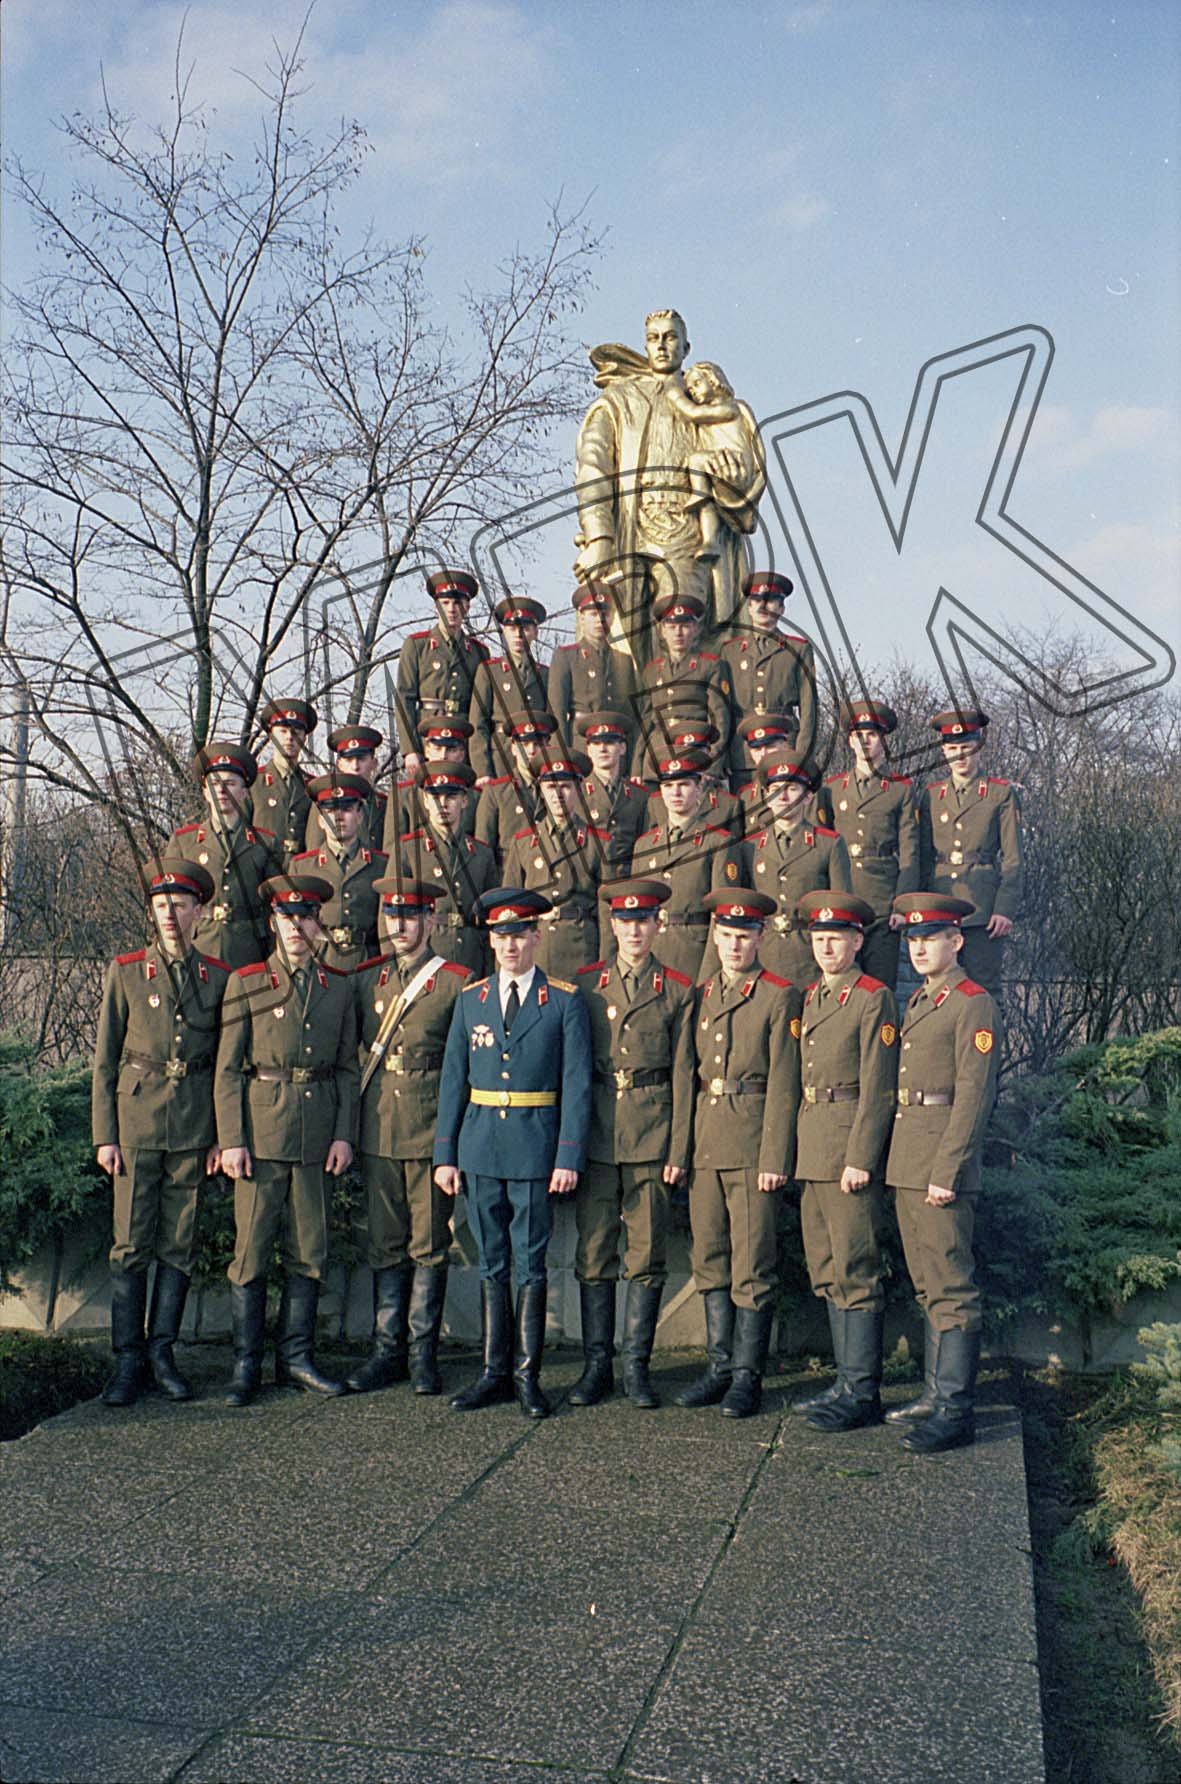 Fotografie: Erinnerungsbild gerade vereidigter Soldaten, Berlin-Karlshorst, Dezember 1993 (Museum Berlin-Karlshorst RR-P)